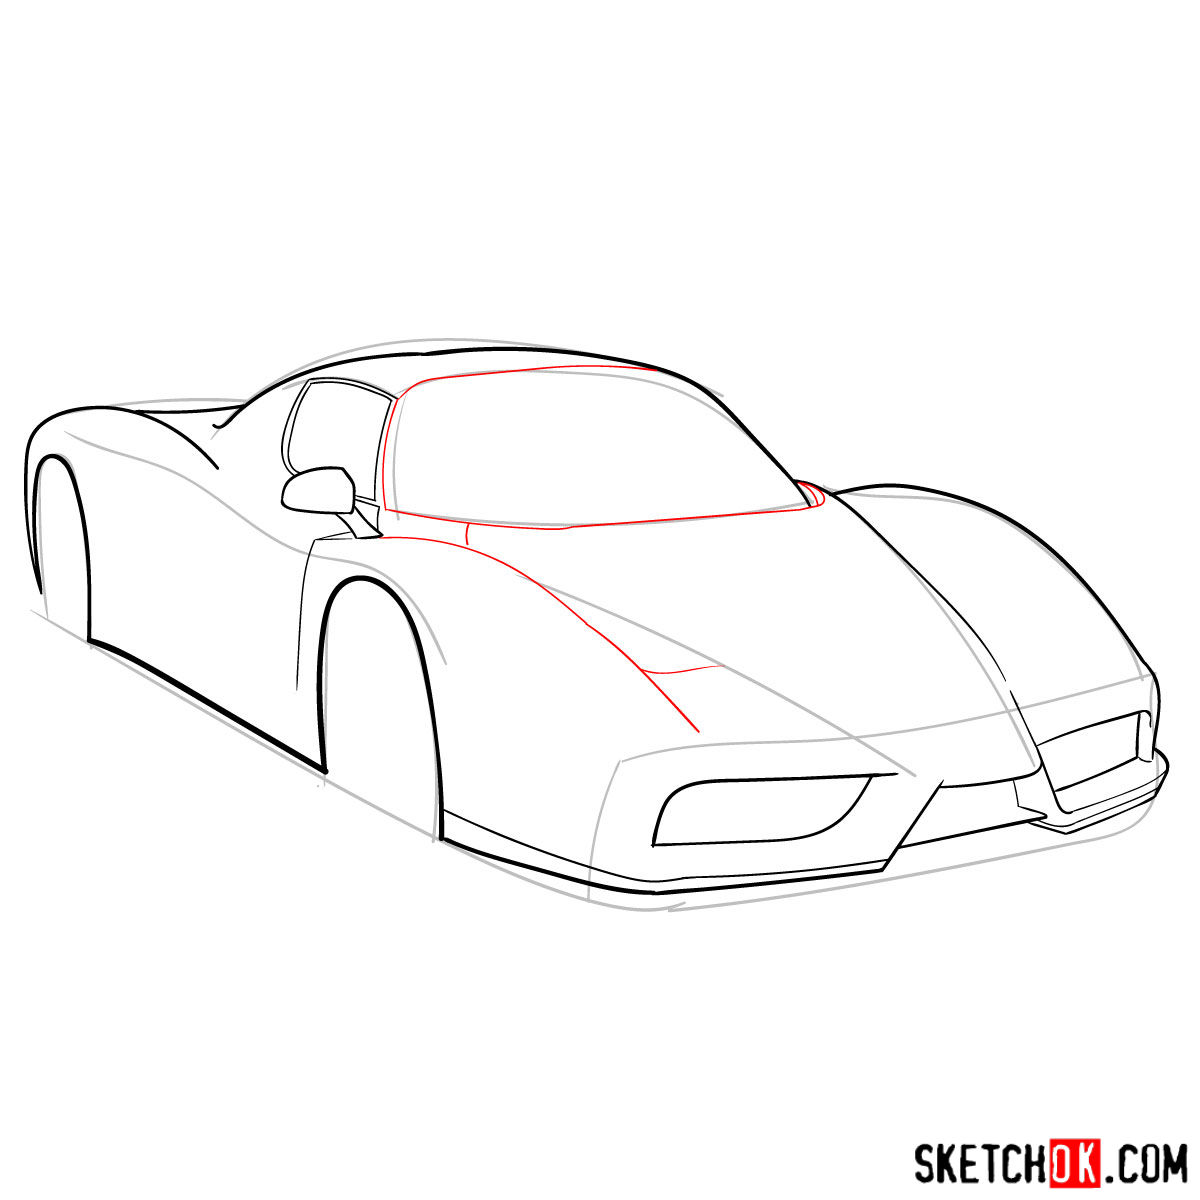 How to draw Ferrari Enzo legendary supercar - step 06